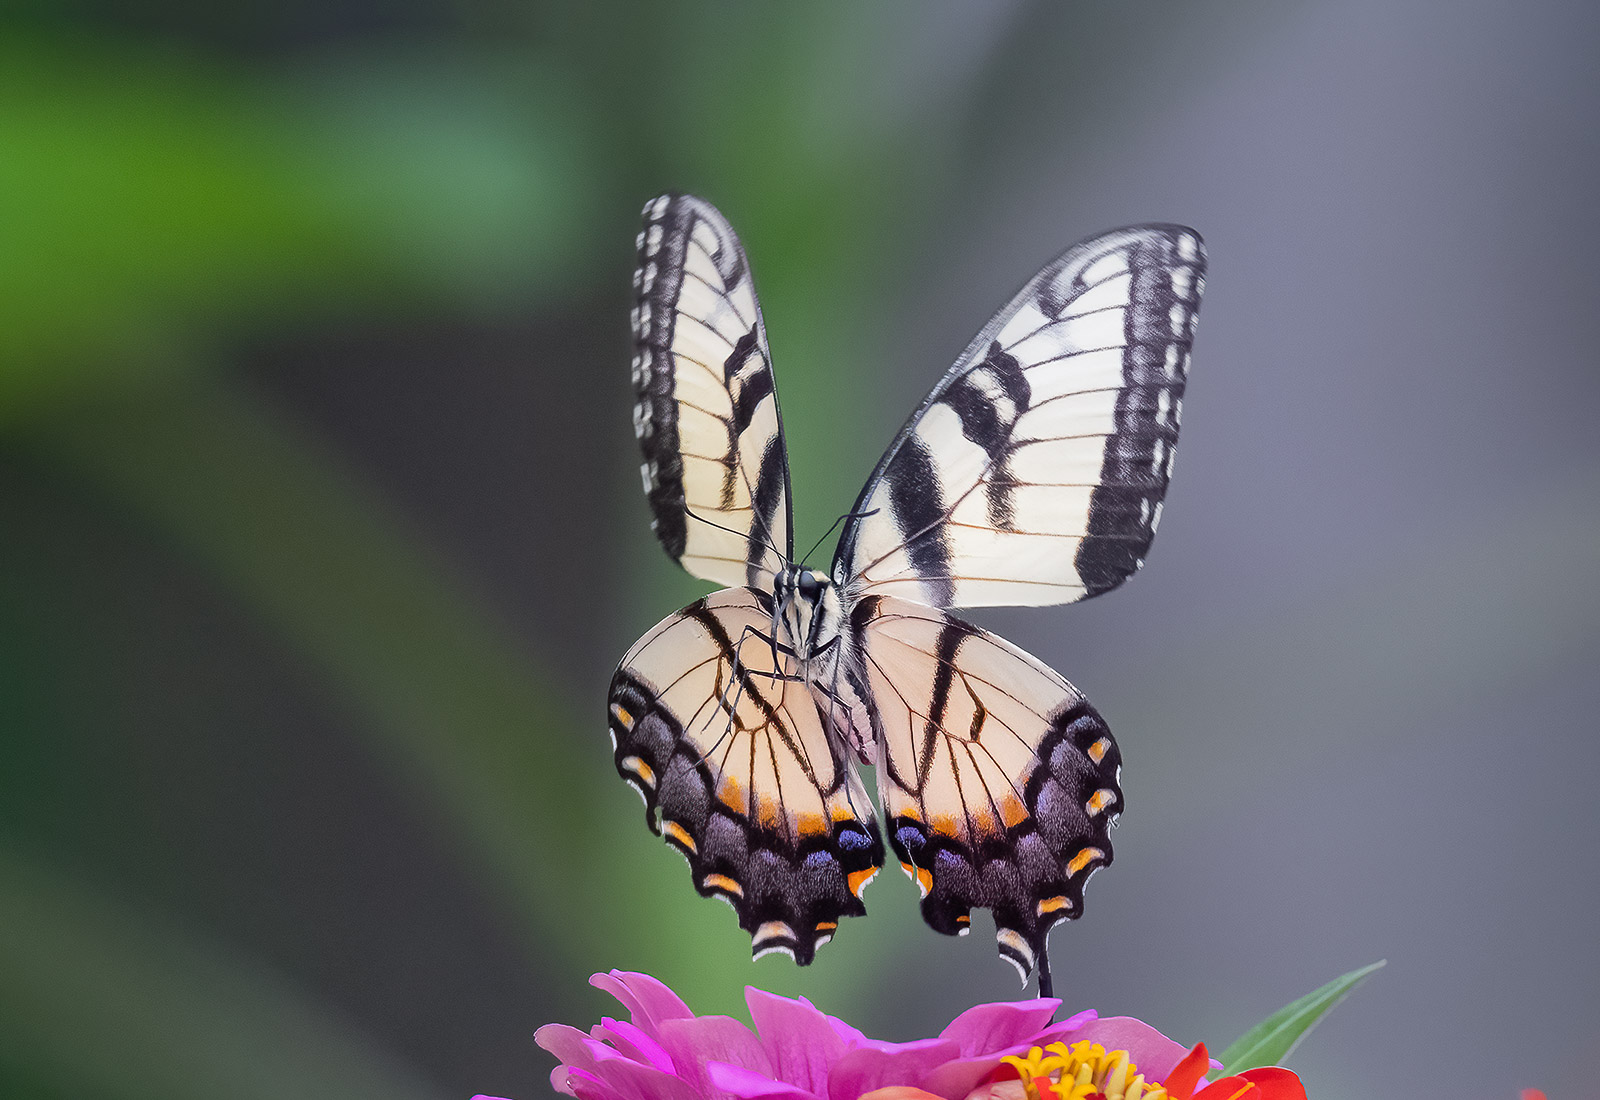 Eastern Tiger Swallowtail, Kane County, IL